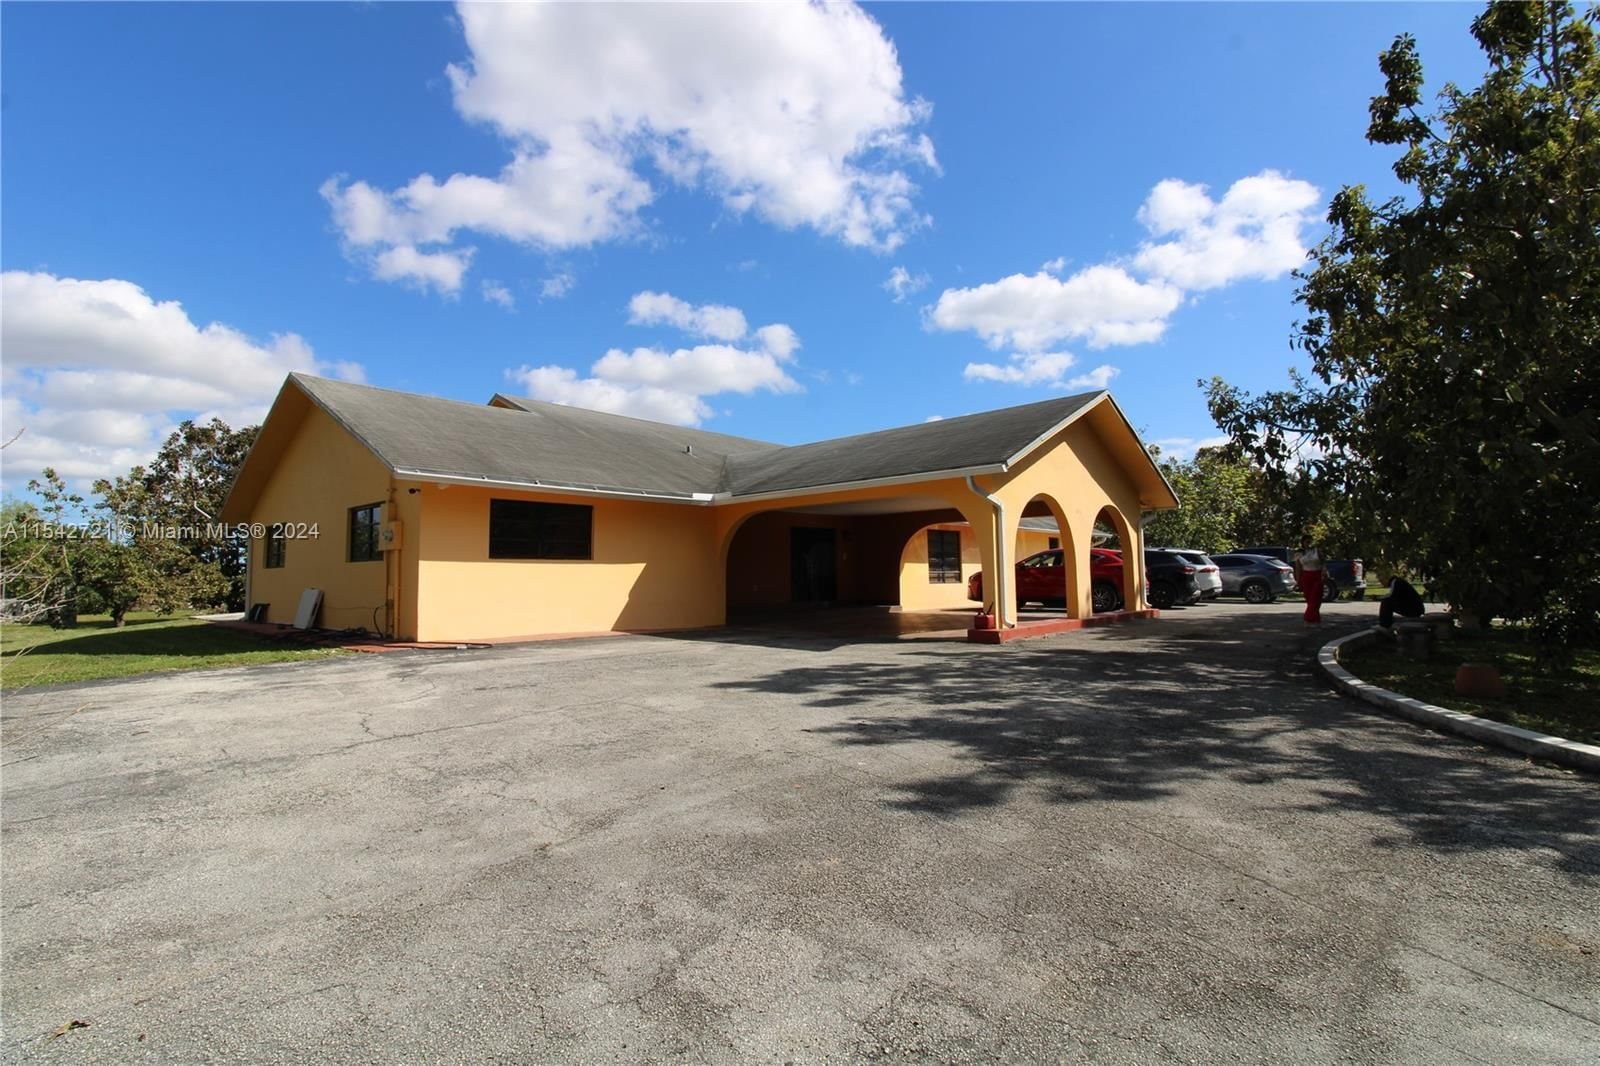 Real estate property located at 15715 196th Ave, Miami-Dade County, Redland, Miami, FL